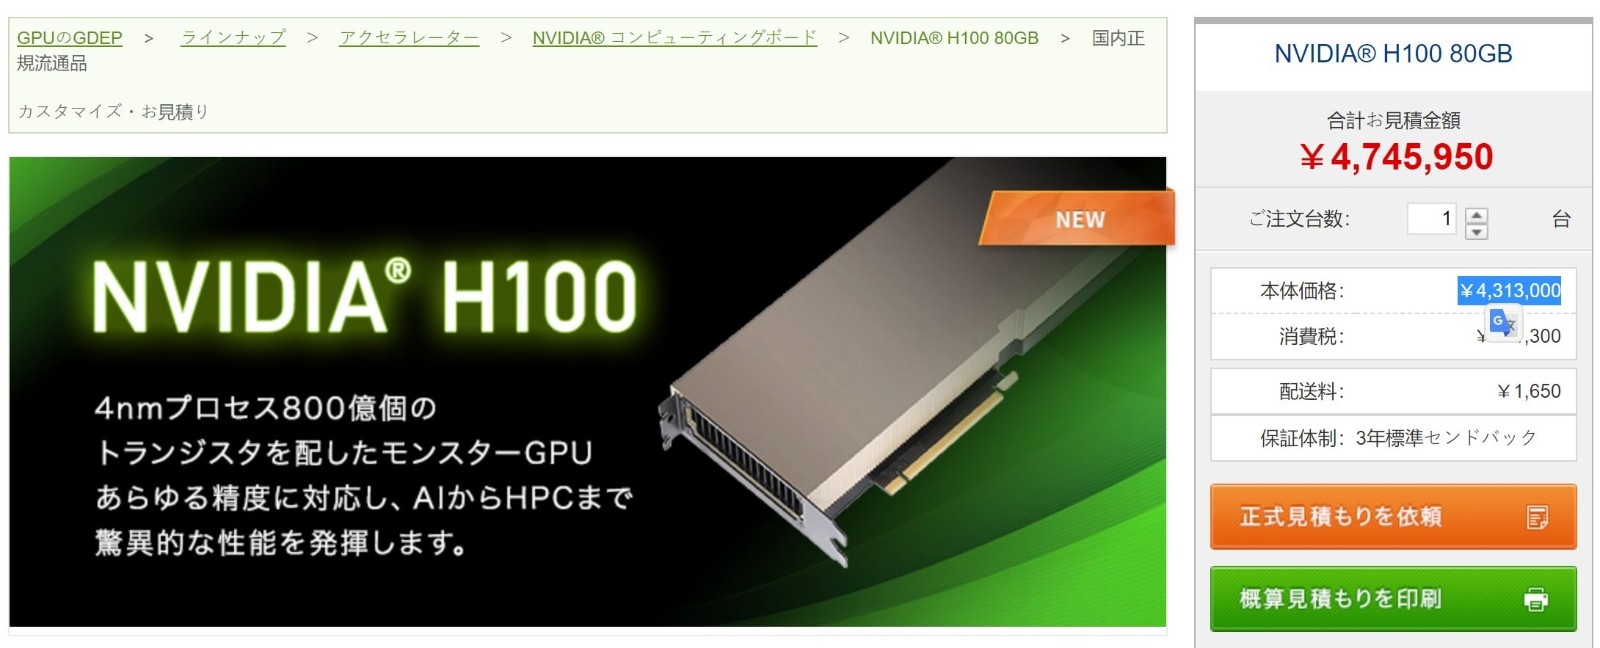 80G隐存 NVIDIA H100 Hopper减速盘算卡上市